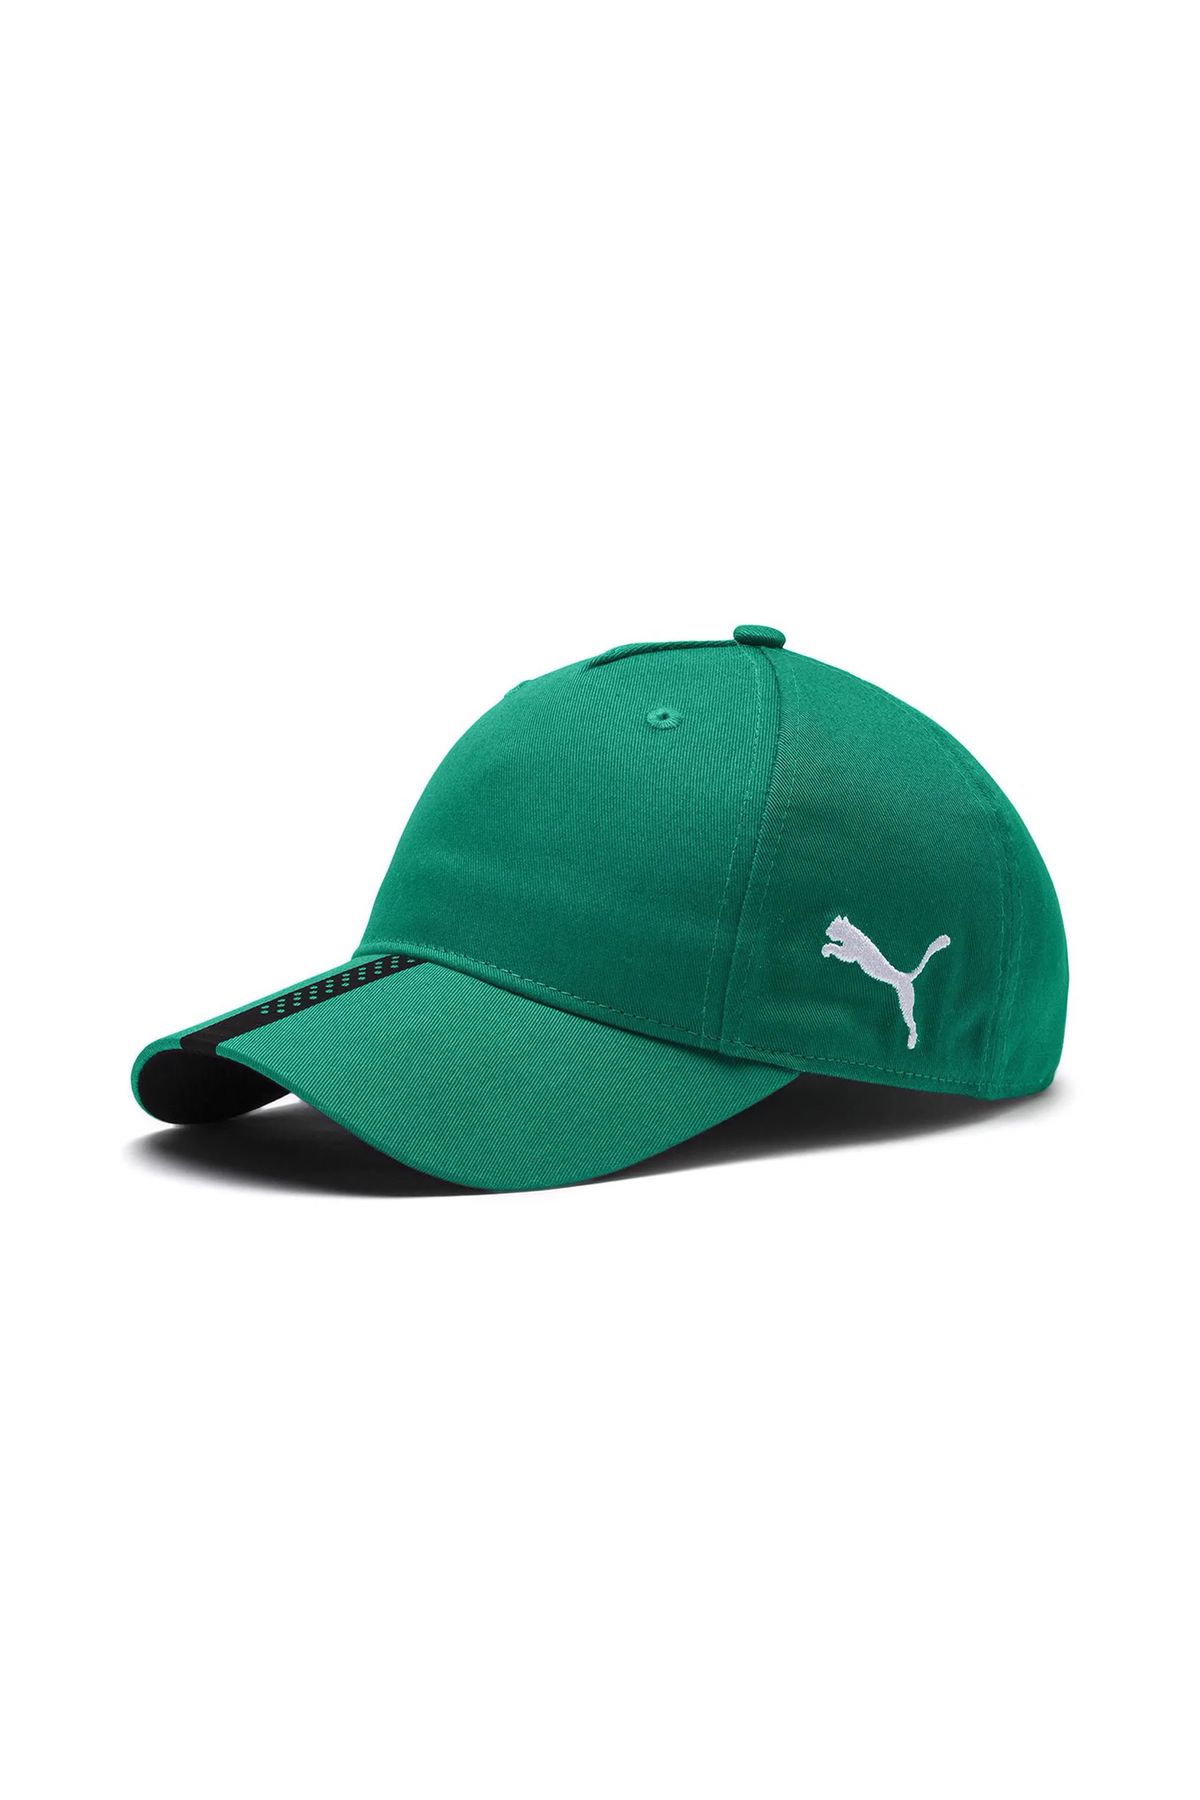 Puma Unisex Ayarlanabilir Spor Şapka